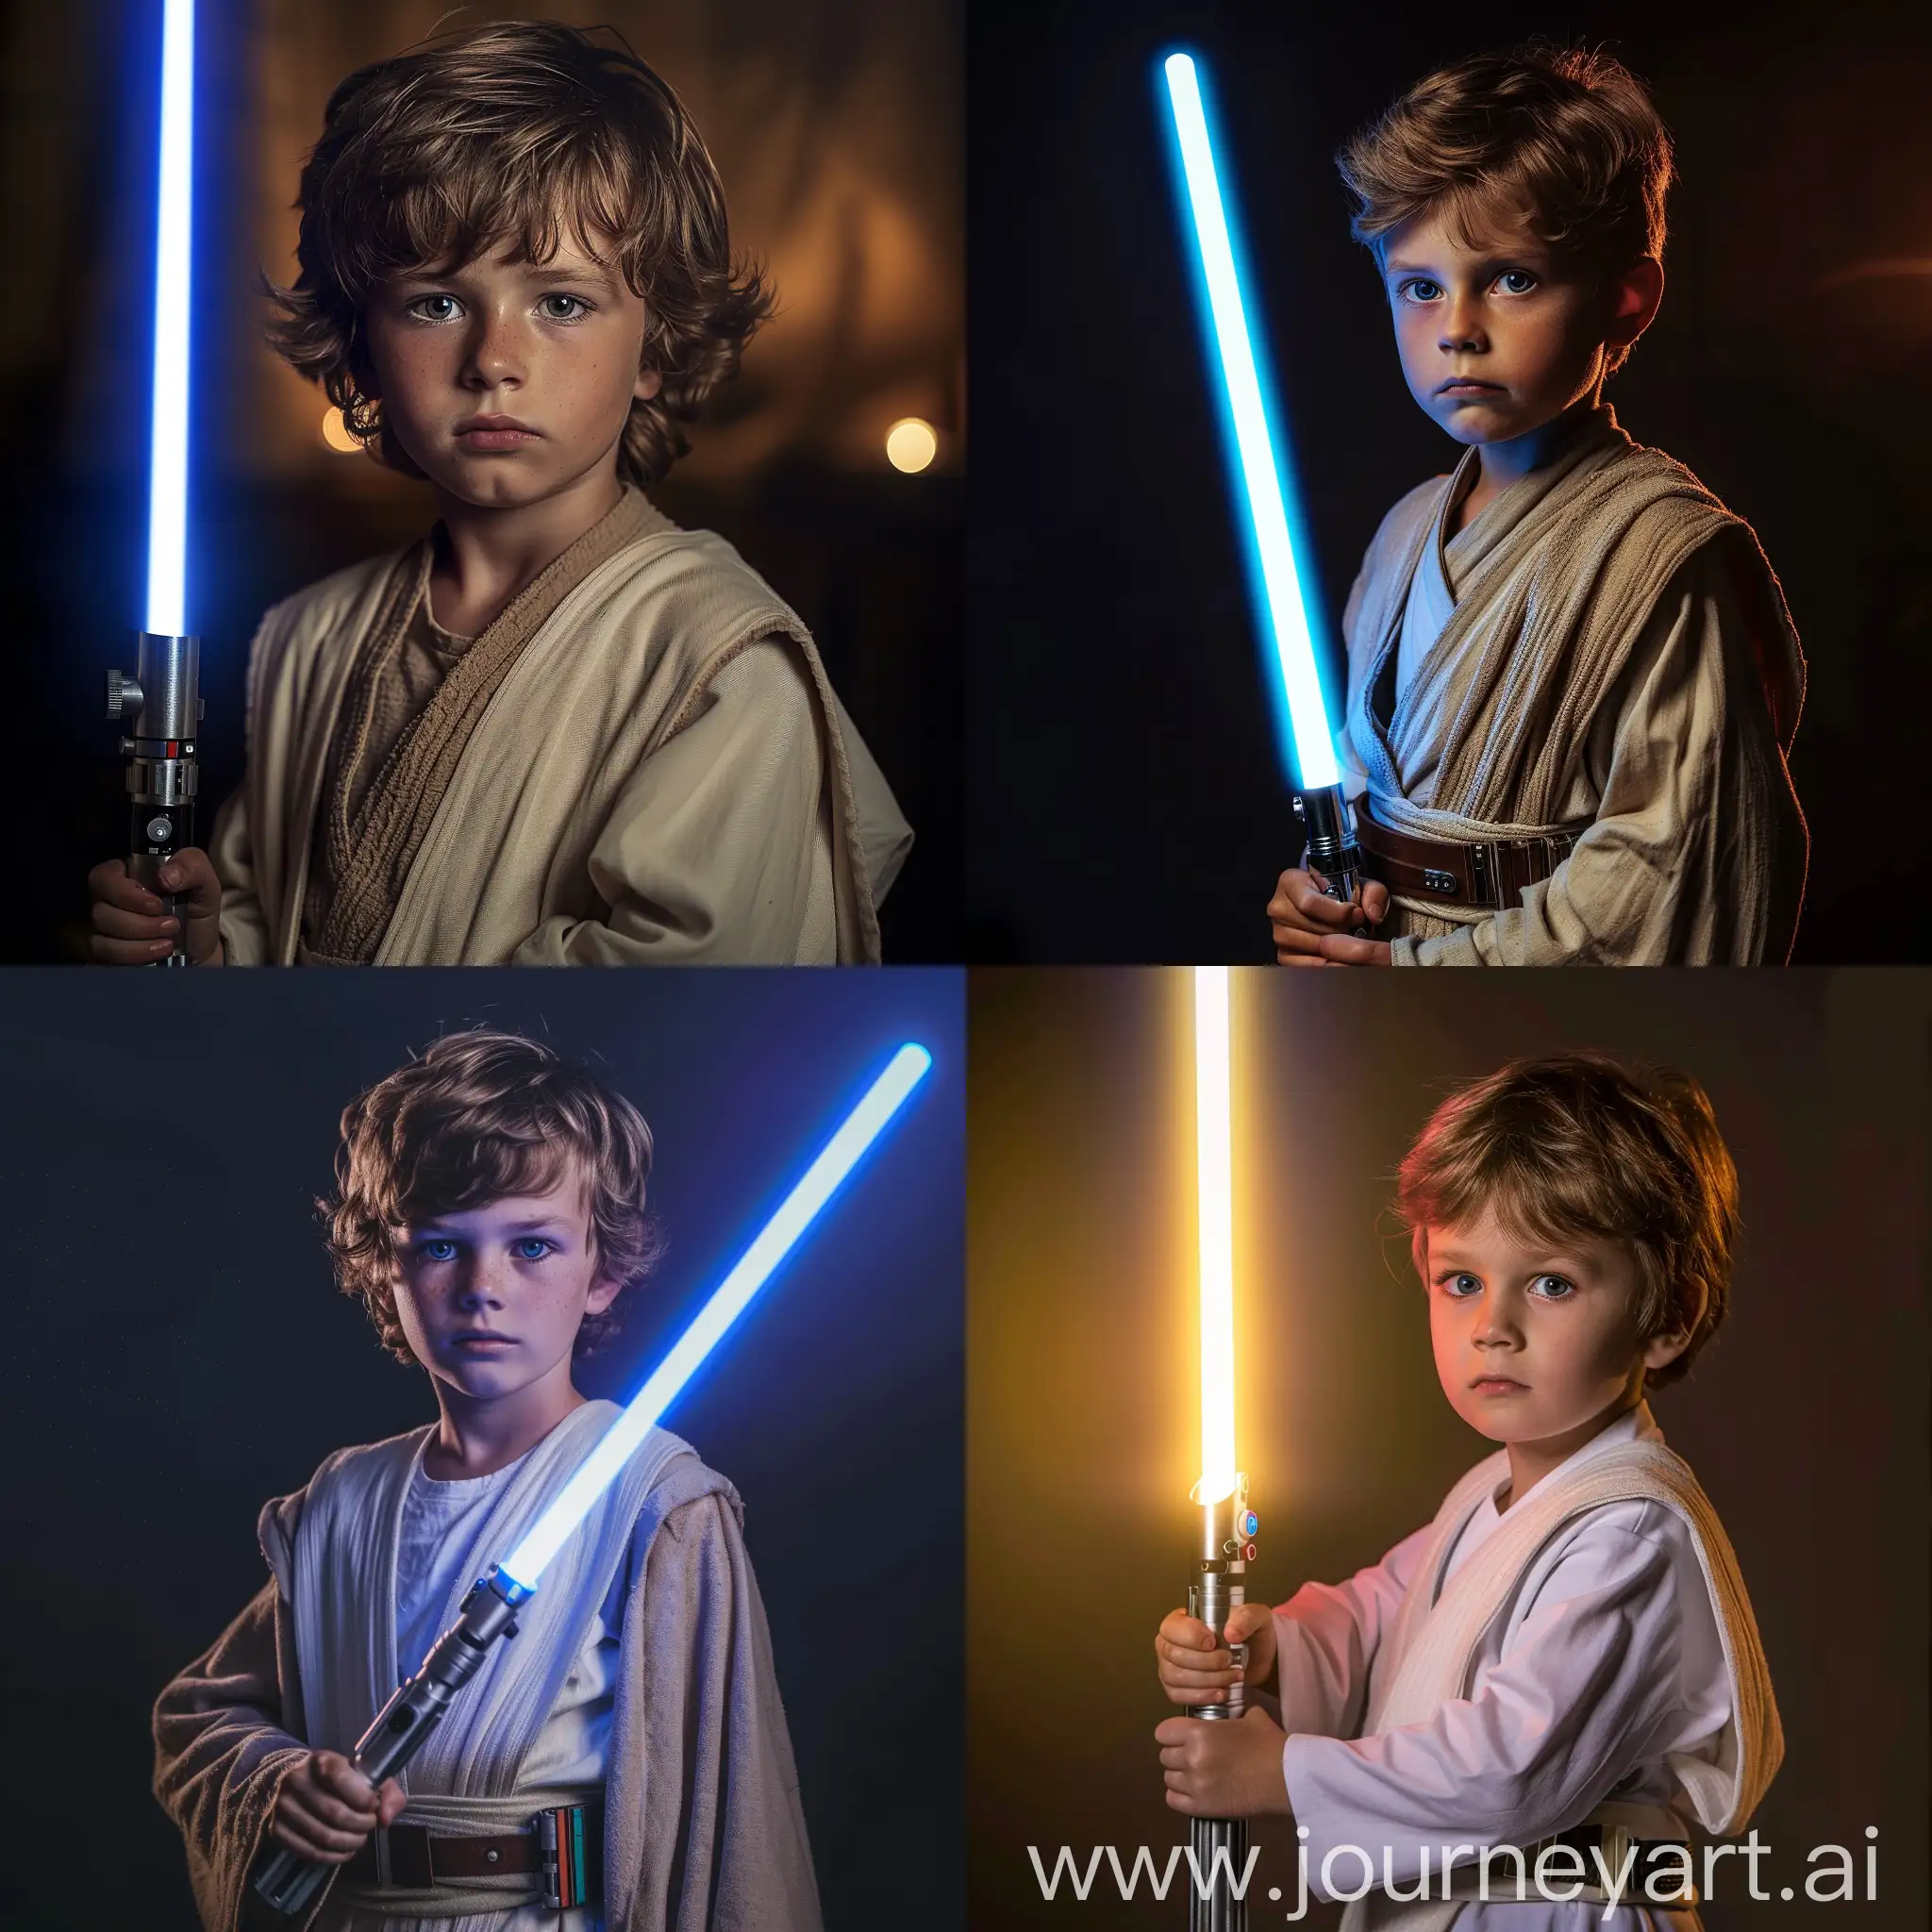 Young-Jedi-Wielding-Lightsaber-in-Realistic-Portrait